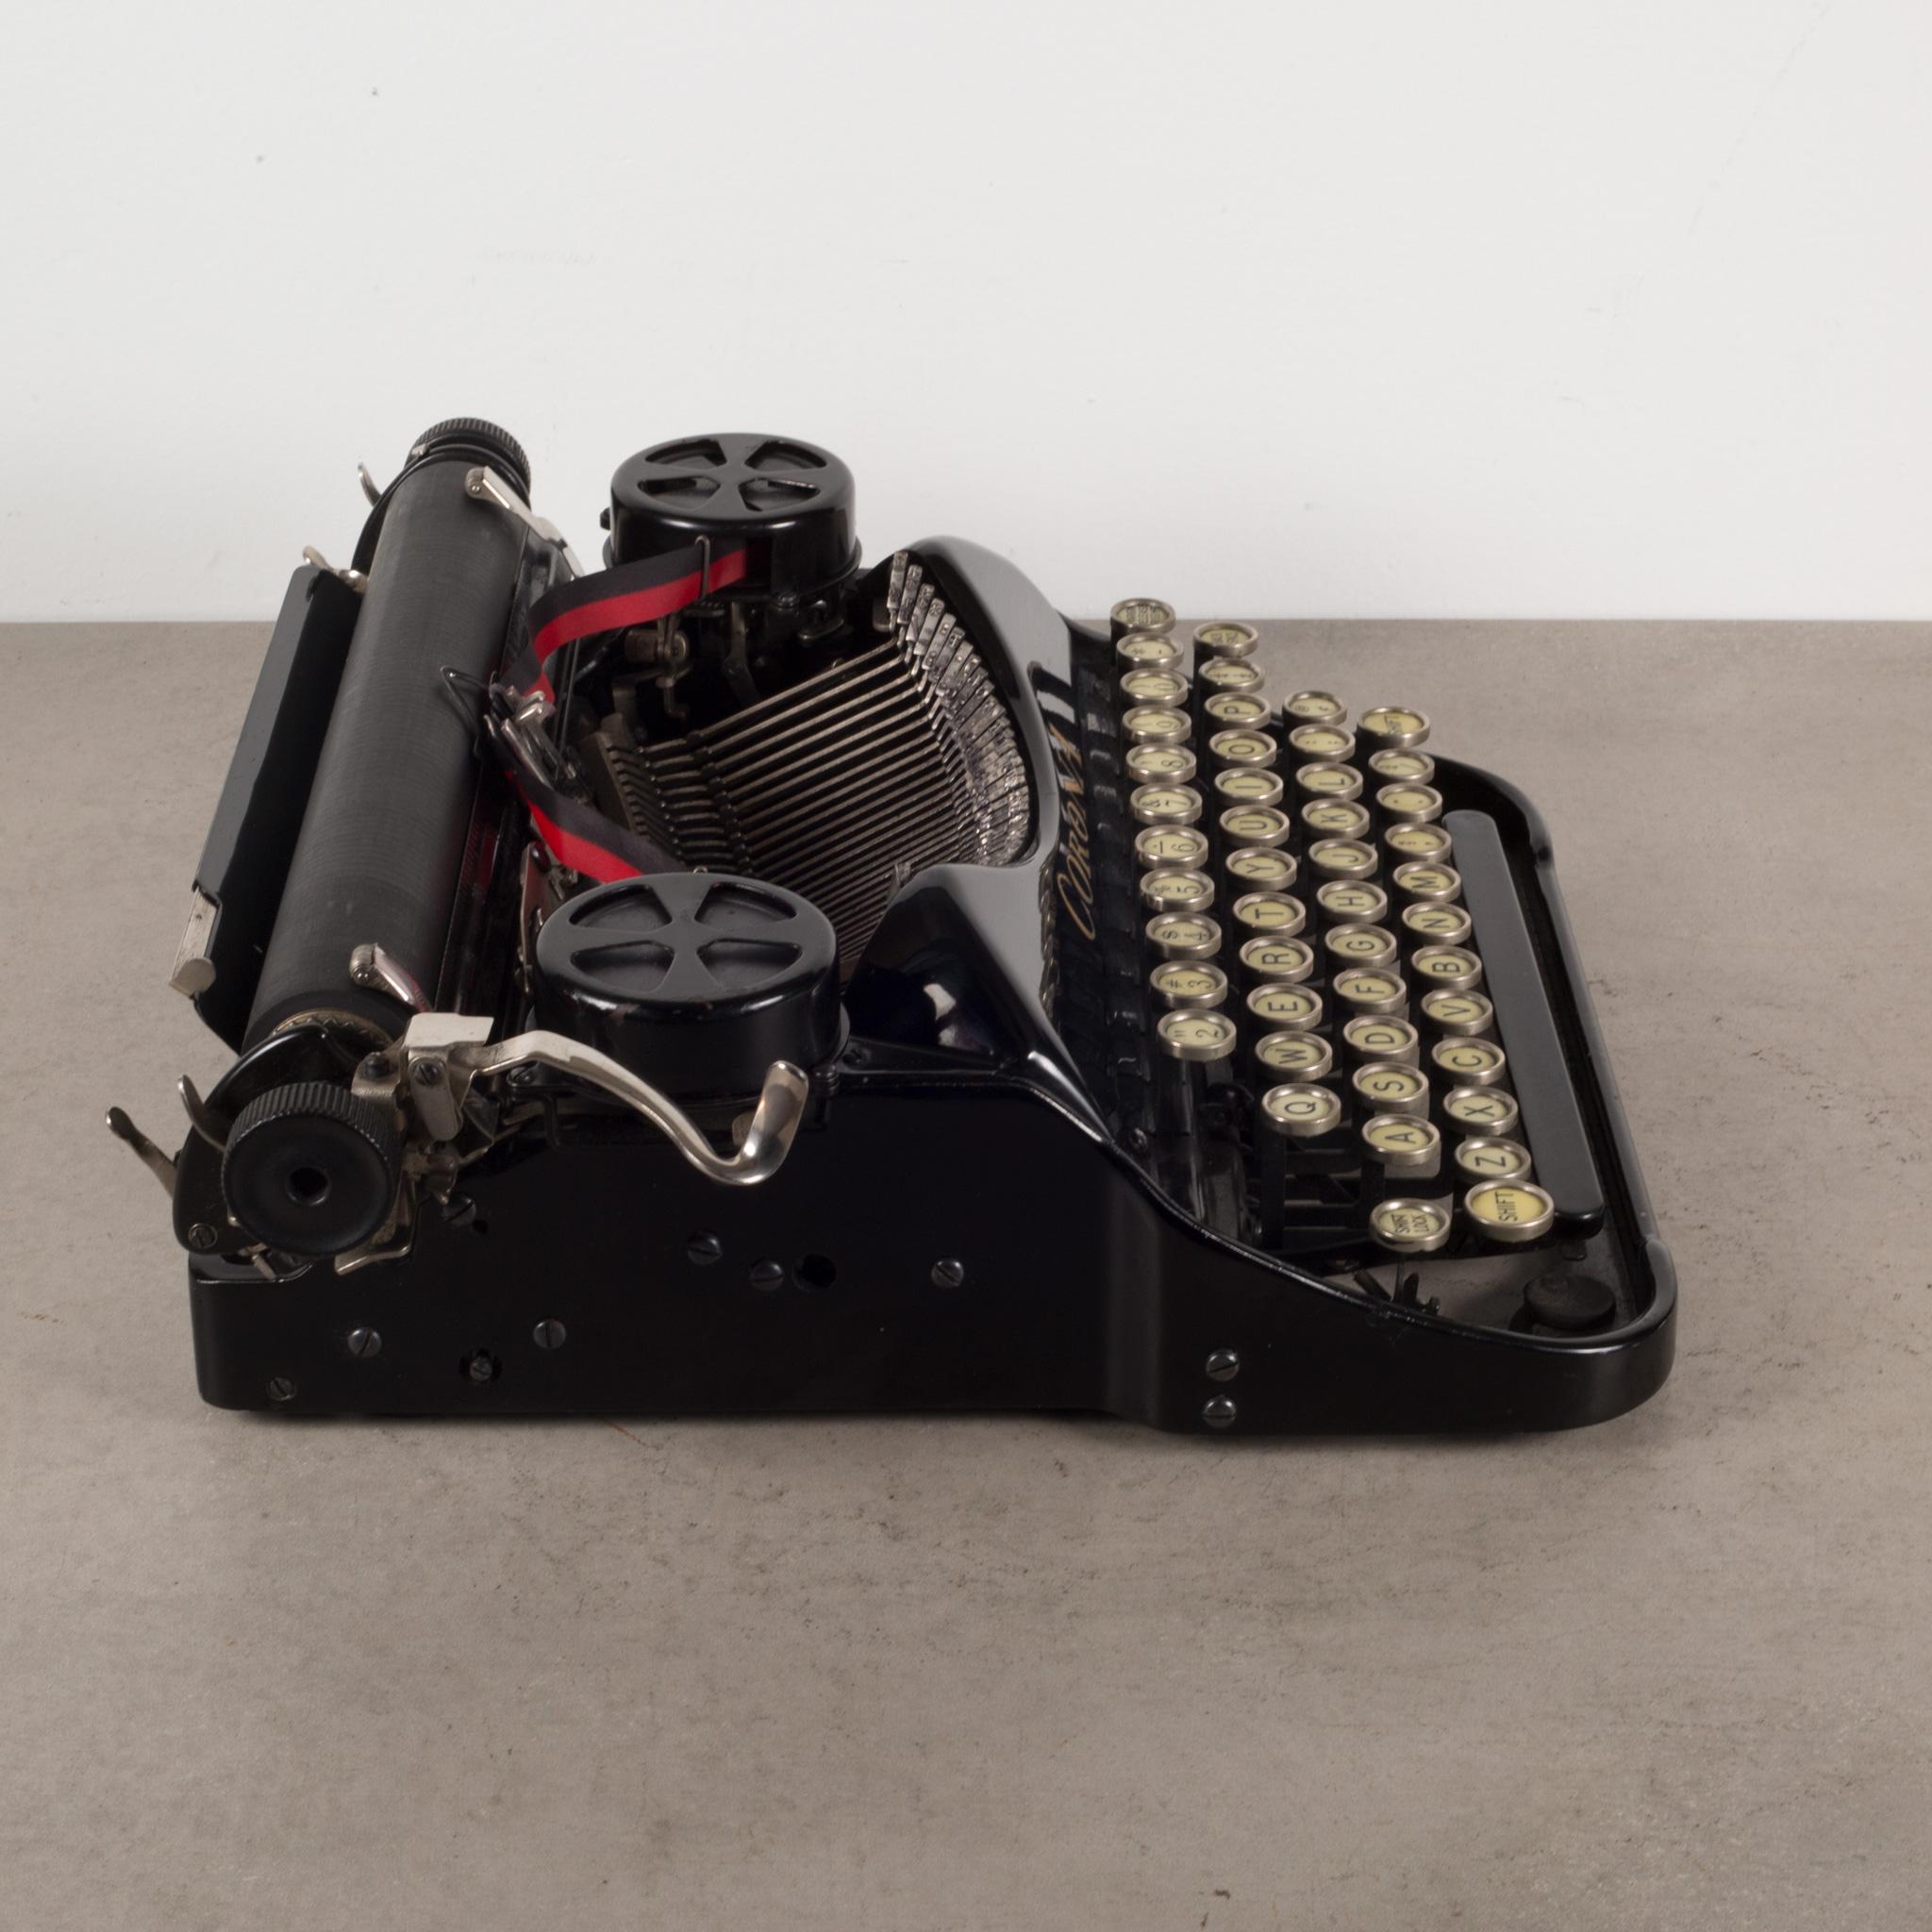 Antique Art Deco Refurbished Corona Portable Typewriter c.1930 1